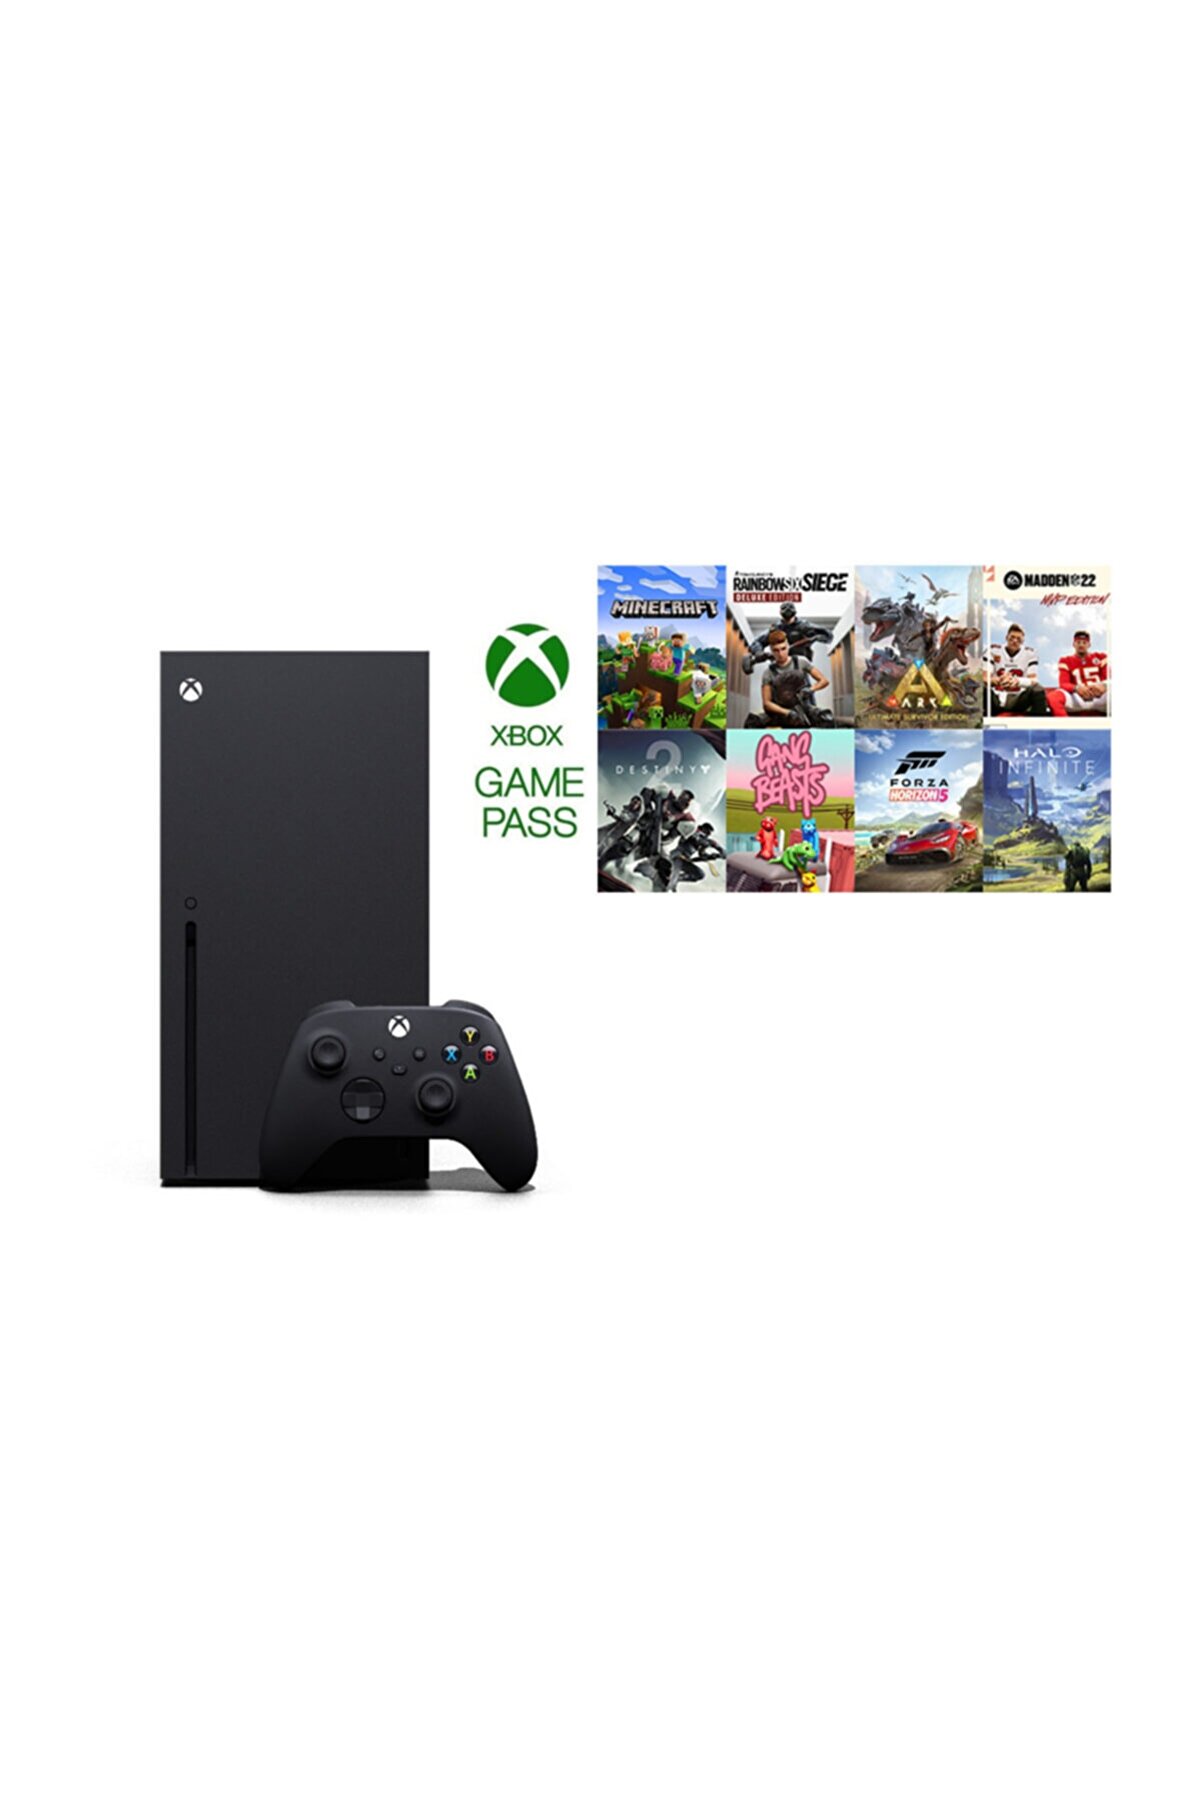 Microsoft Xbox Series X 1TB SSD Oyun Konsolu + 3 Ay Gamepass Ultimate Hediye